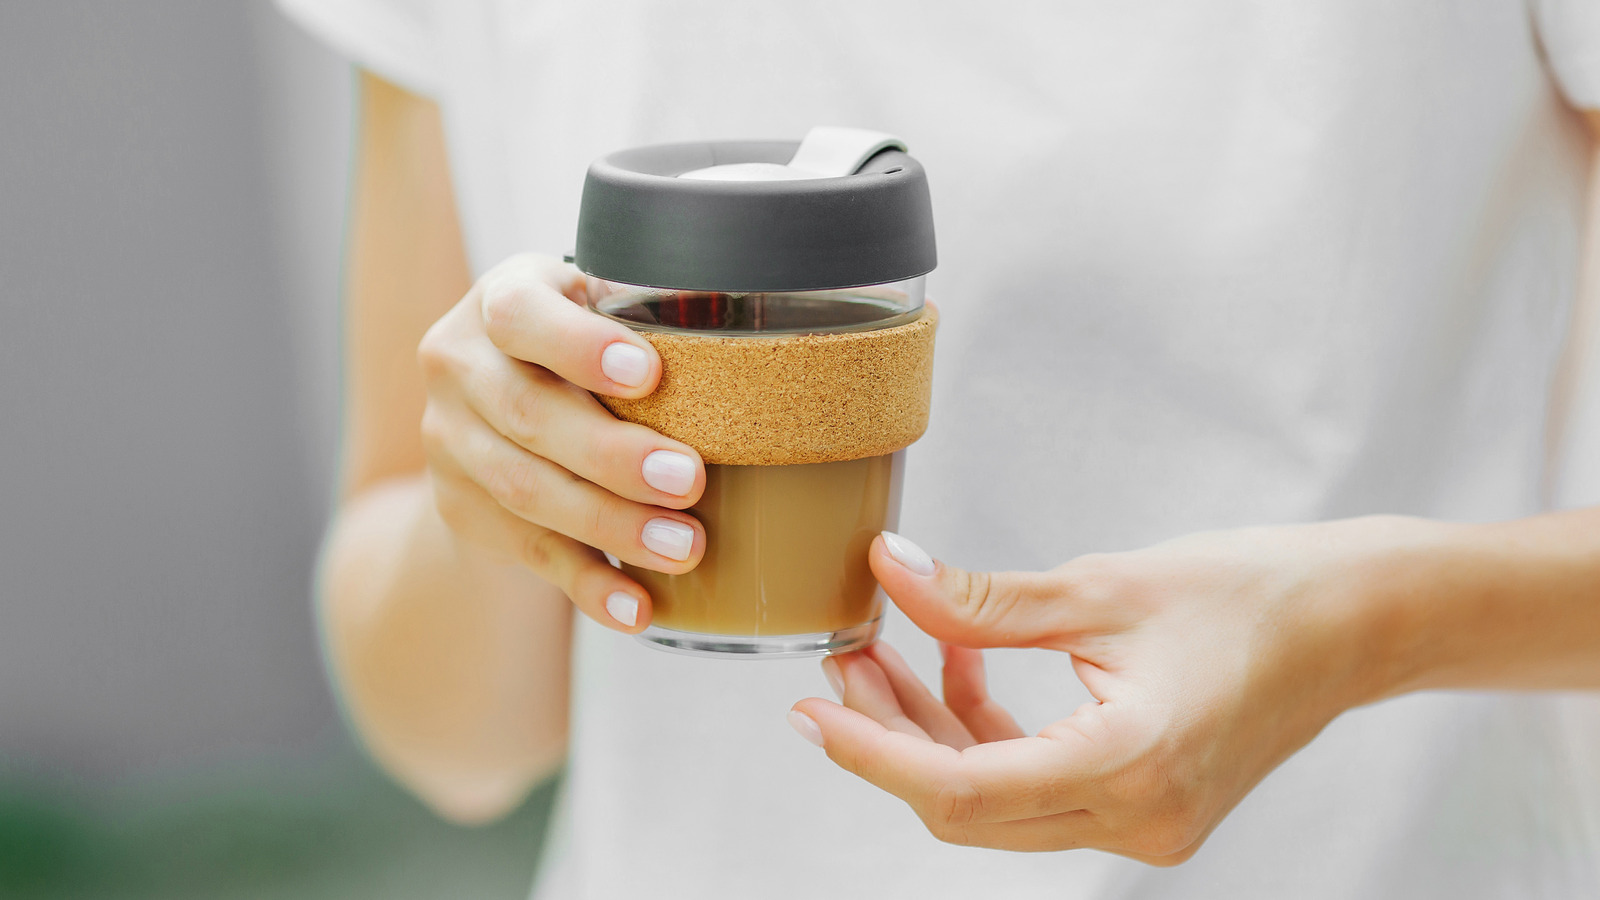 Insulated Travel Coffee Mug - Promo Motive